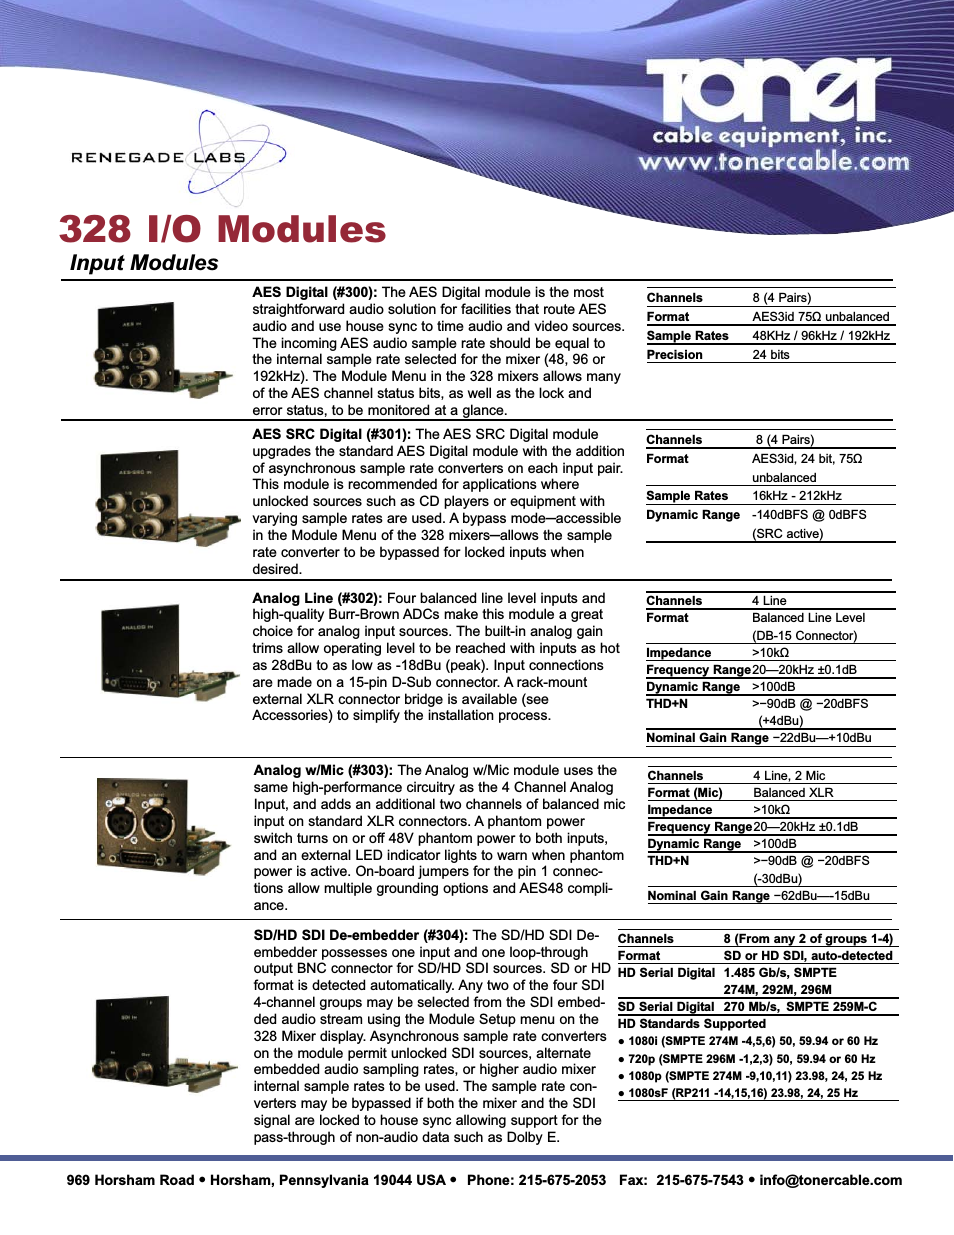 AES Digital #300 328 lnput-Output Modules